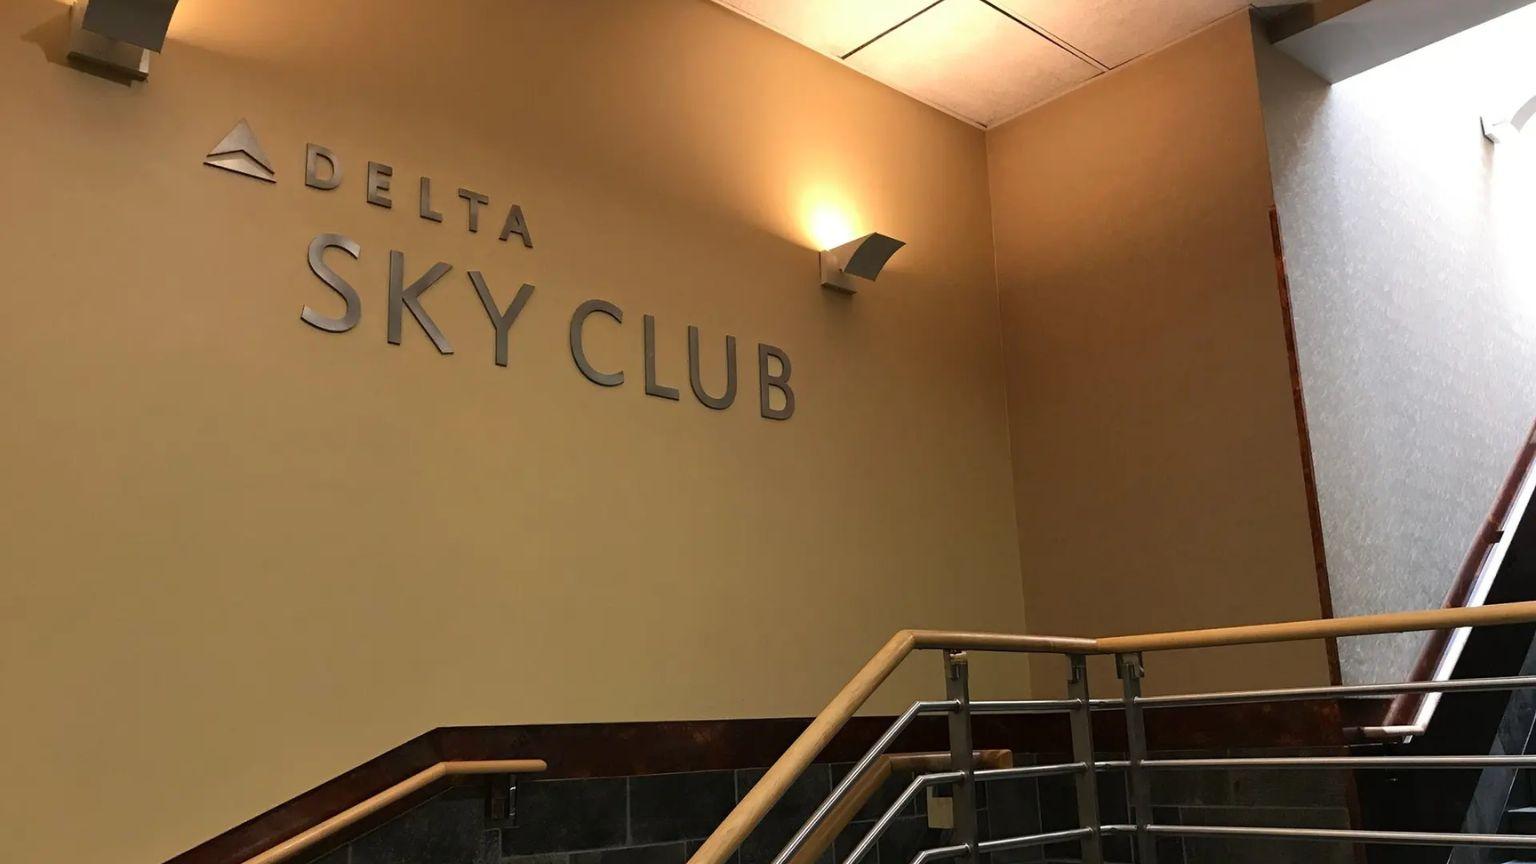 Delta Sky Club ATL Lounge, Concourse A (Gate A17)